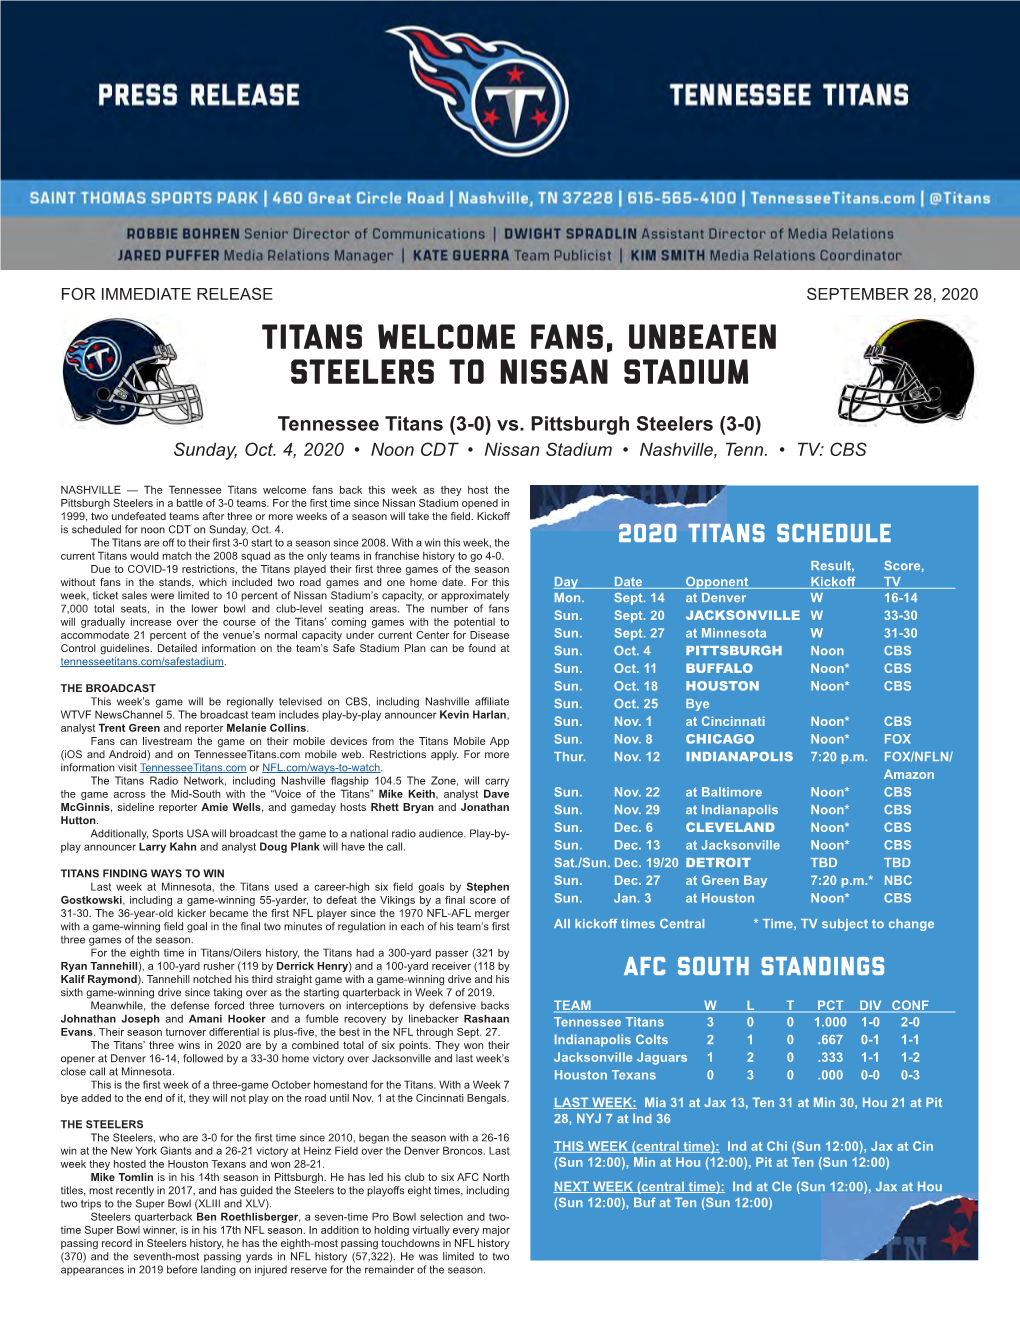 Titans Welcome Fans, Unbeaten Steelers to Nissan Stadium